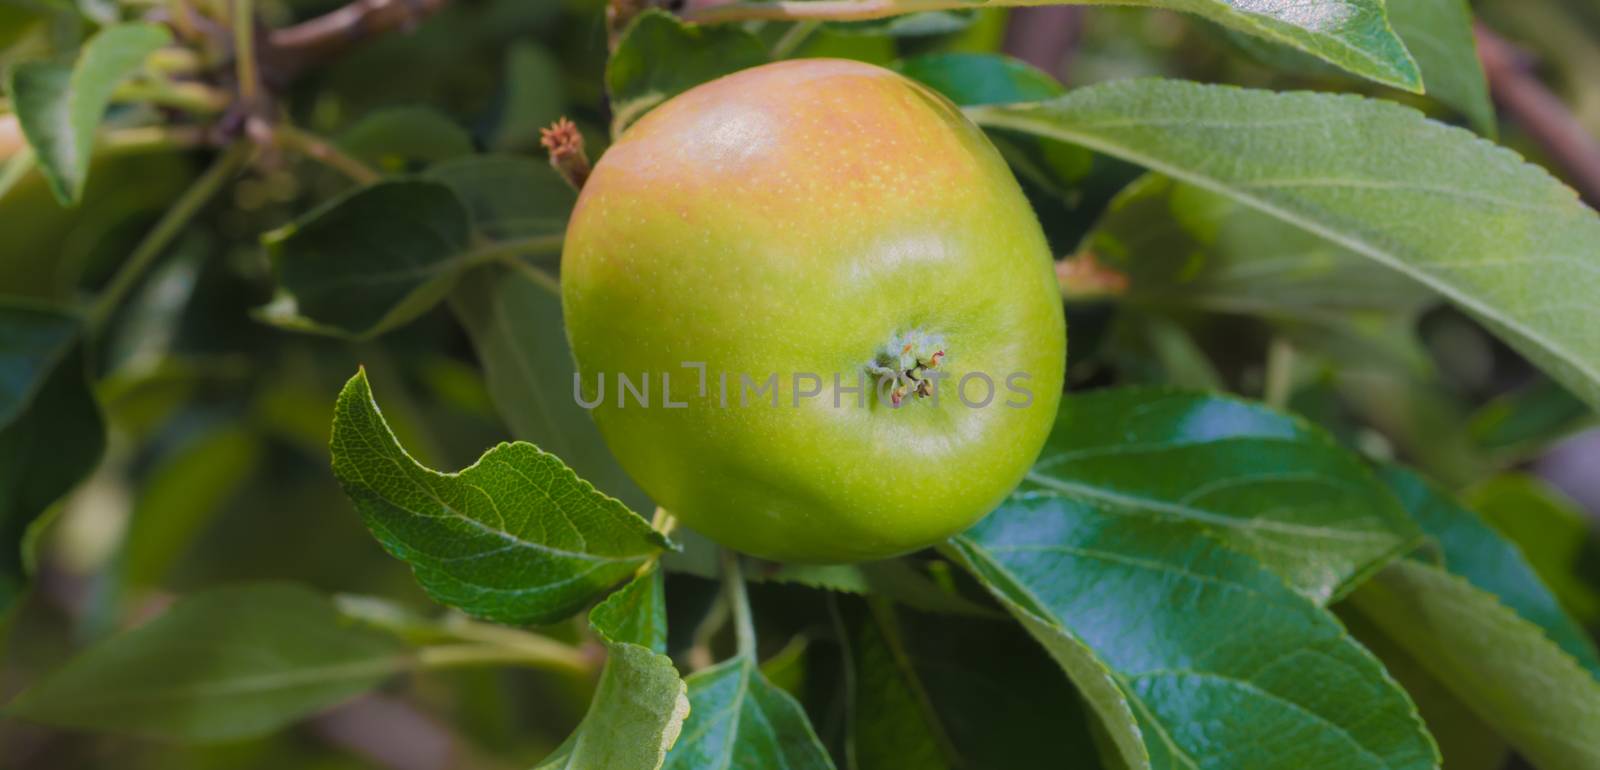 A big apple by petkolophoto